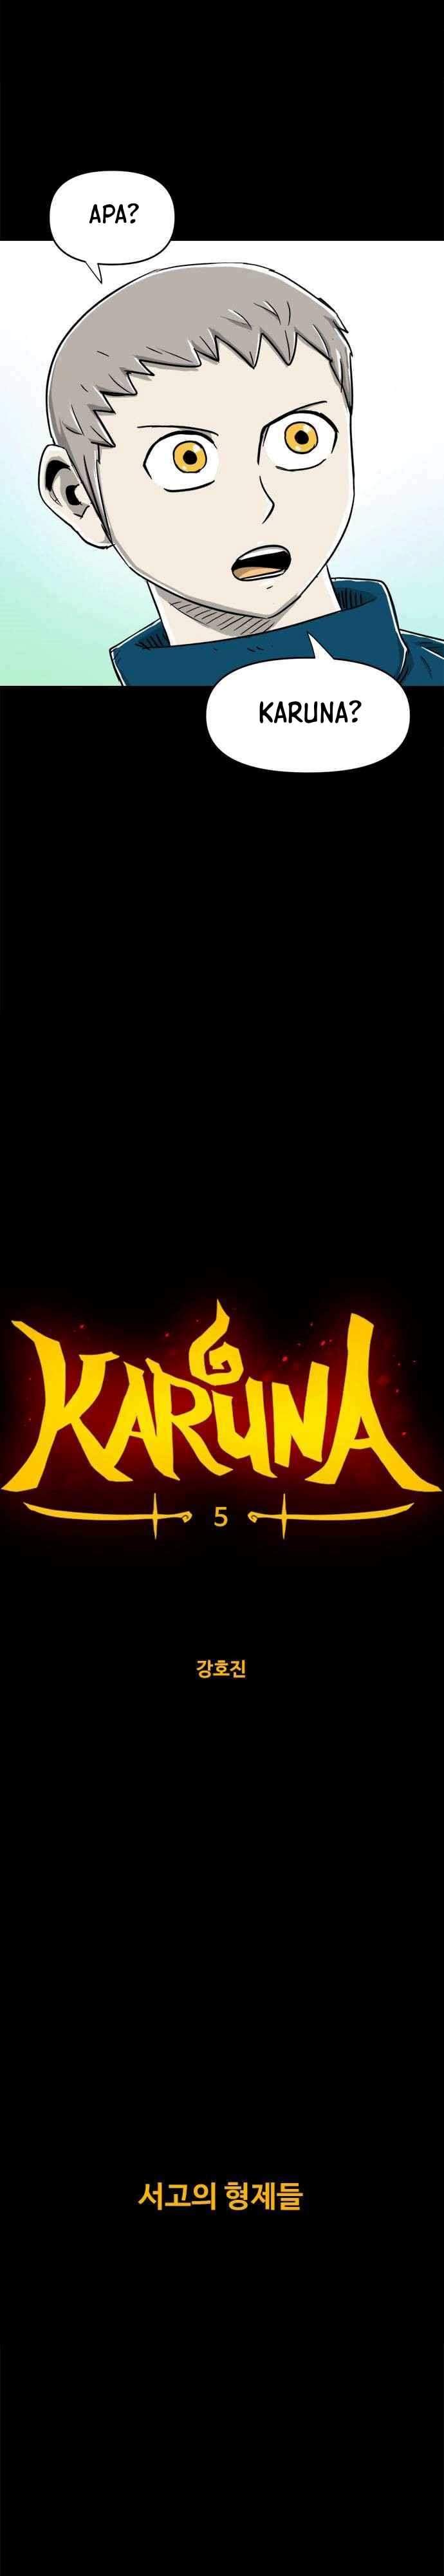 Karuna Chapter 5